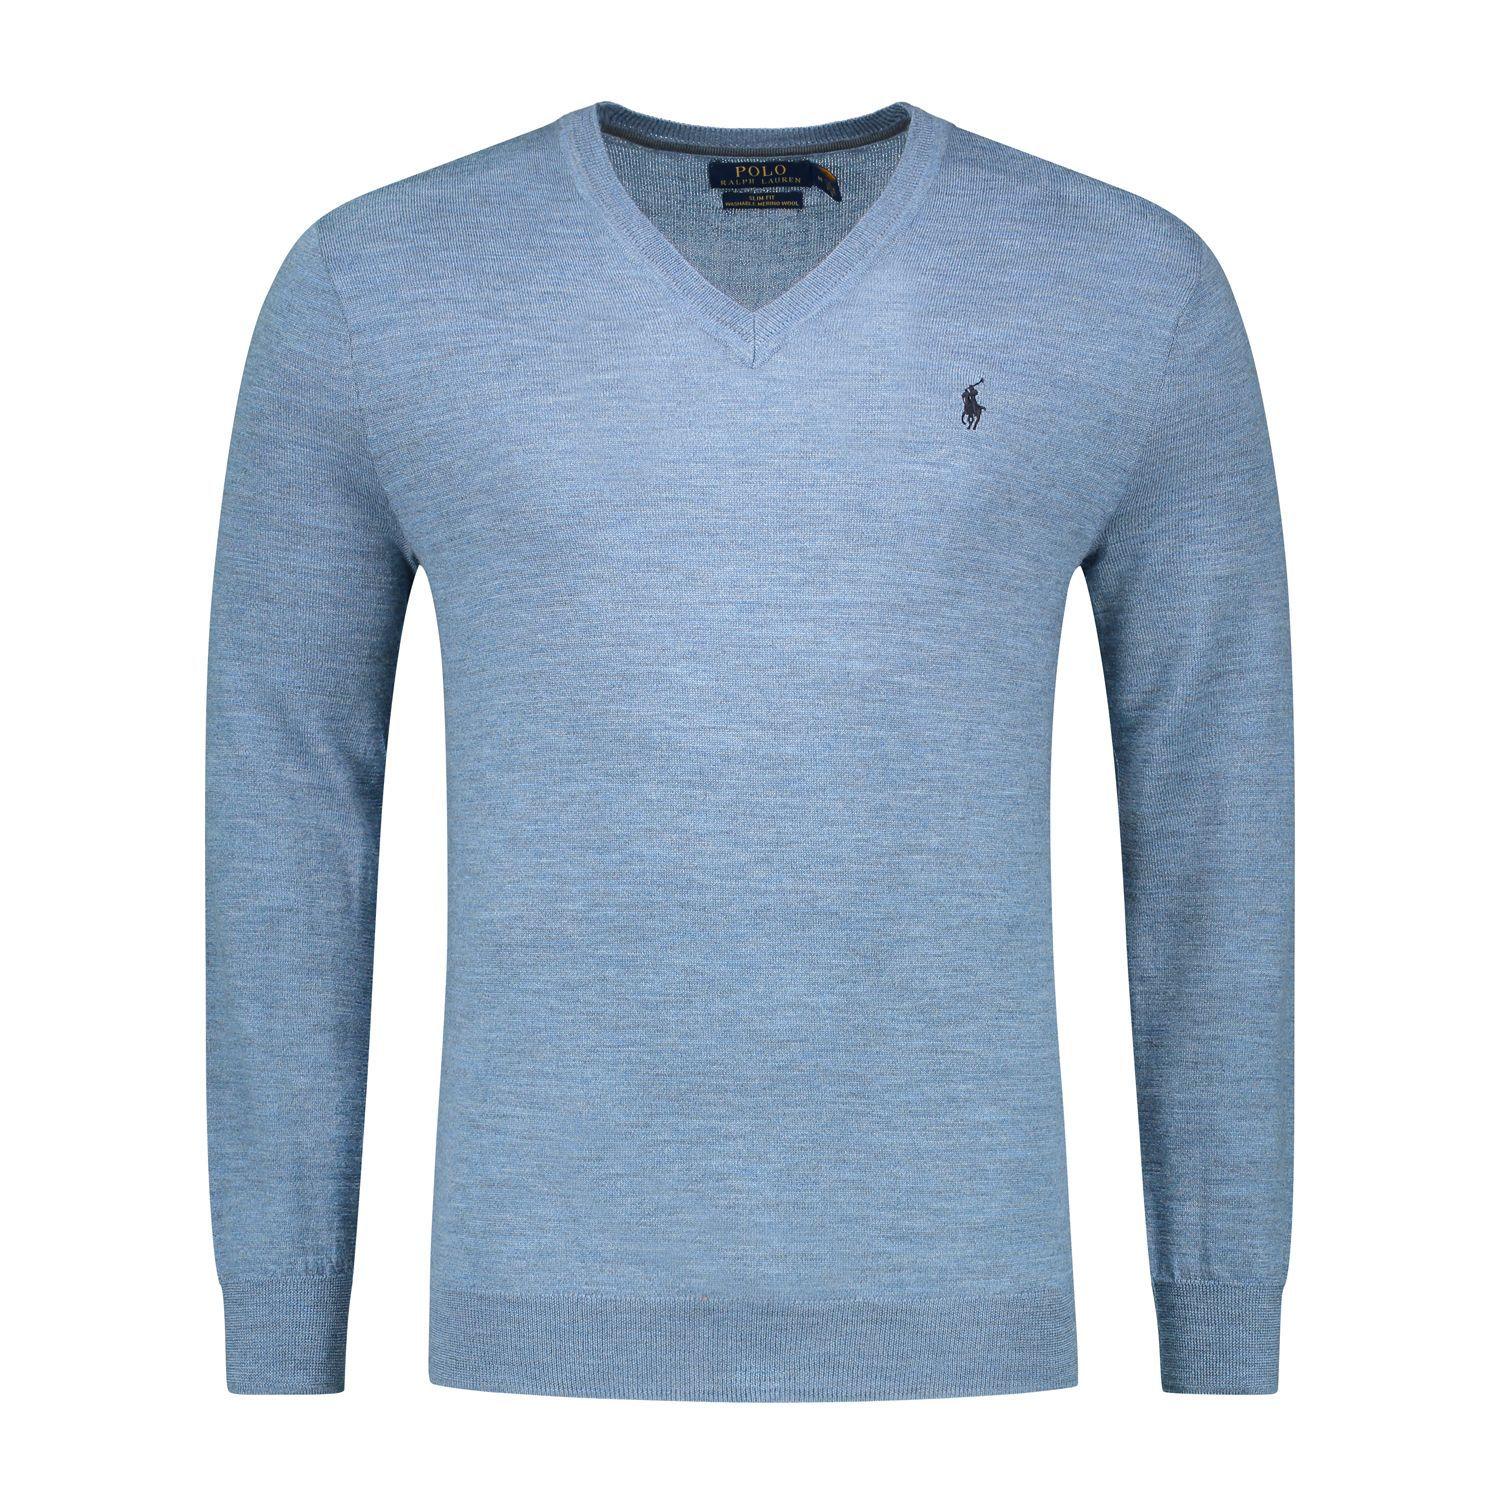 Ralph Lauren Light Blue Wool Sweater in Blue for Men - Lyst